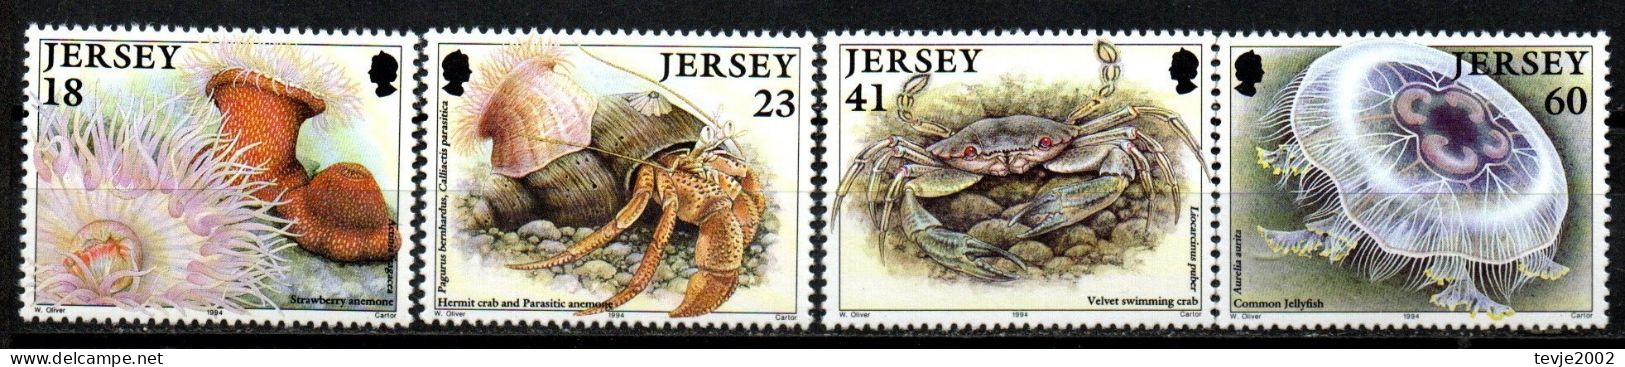 Jersey 1994 - Mi.Nr. 665 - 668 - Postfrisch MNH - Tiere Animals Krabben Crabs - Crustacés